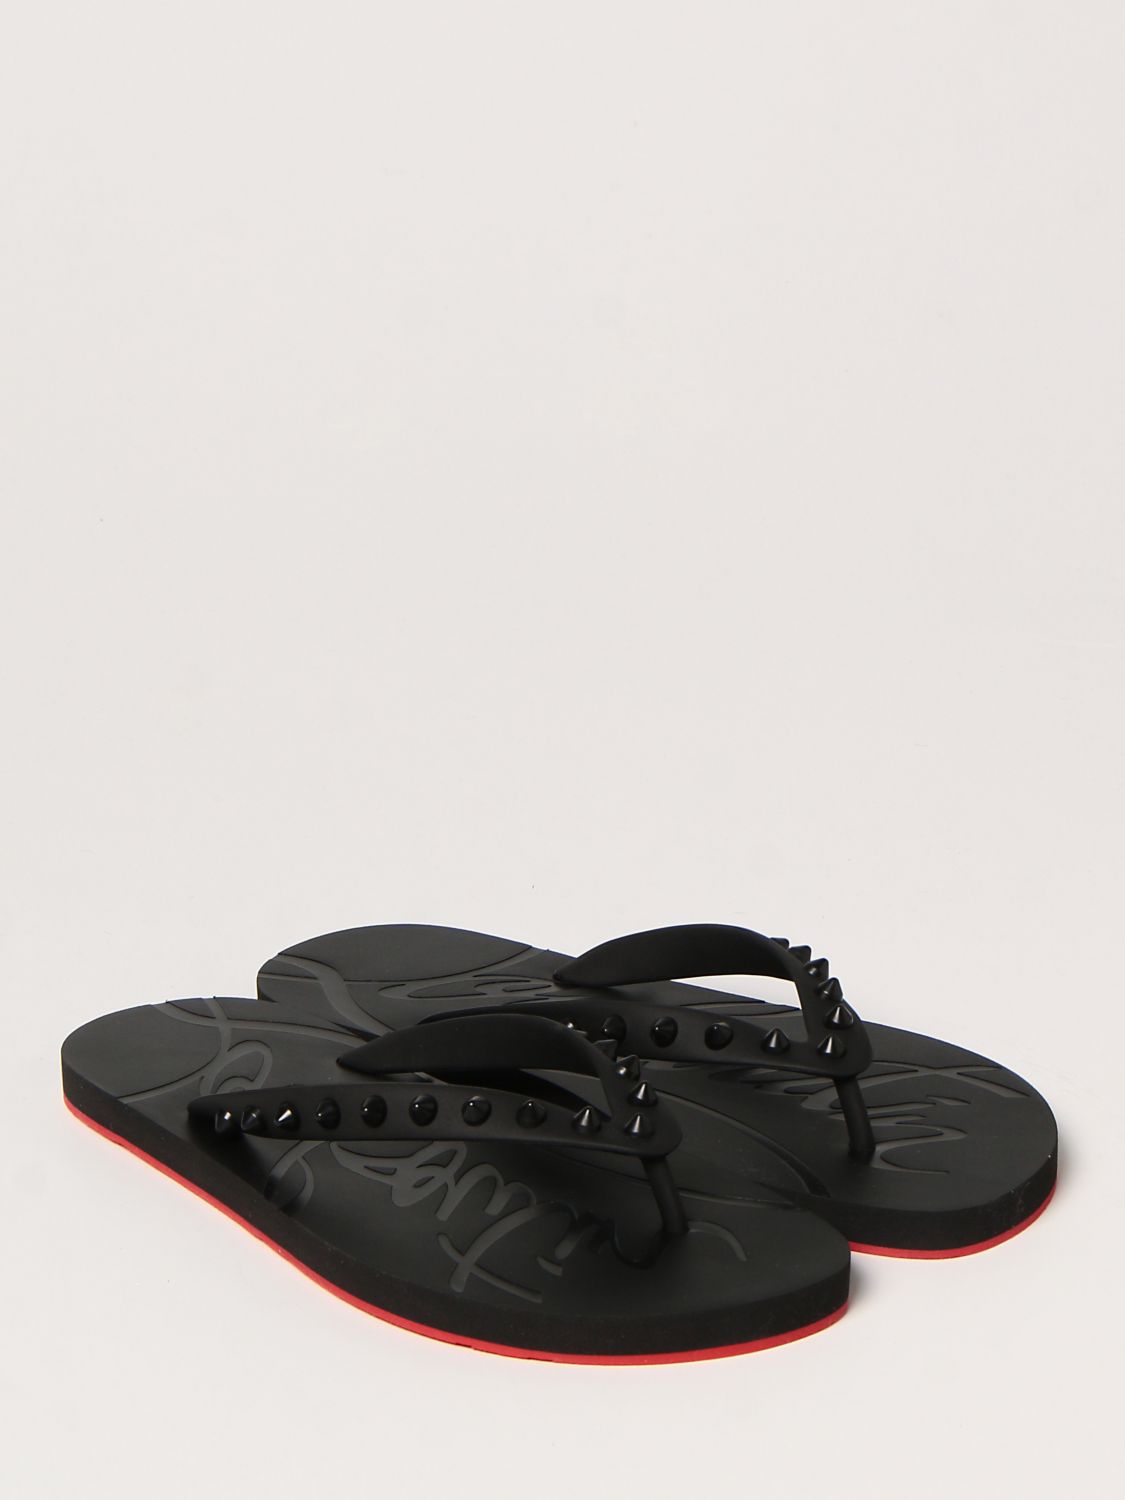 Sandales plates Christian Louboutin: Chaussures femme Christian Louboutin noir 2